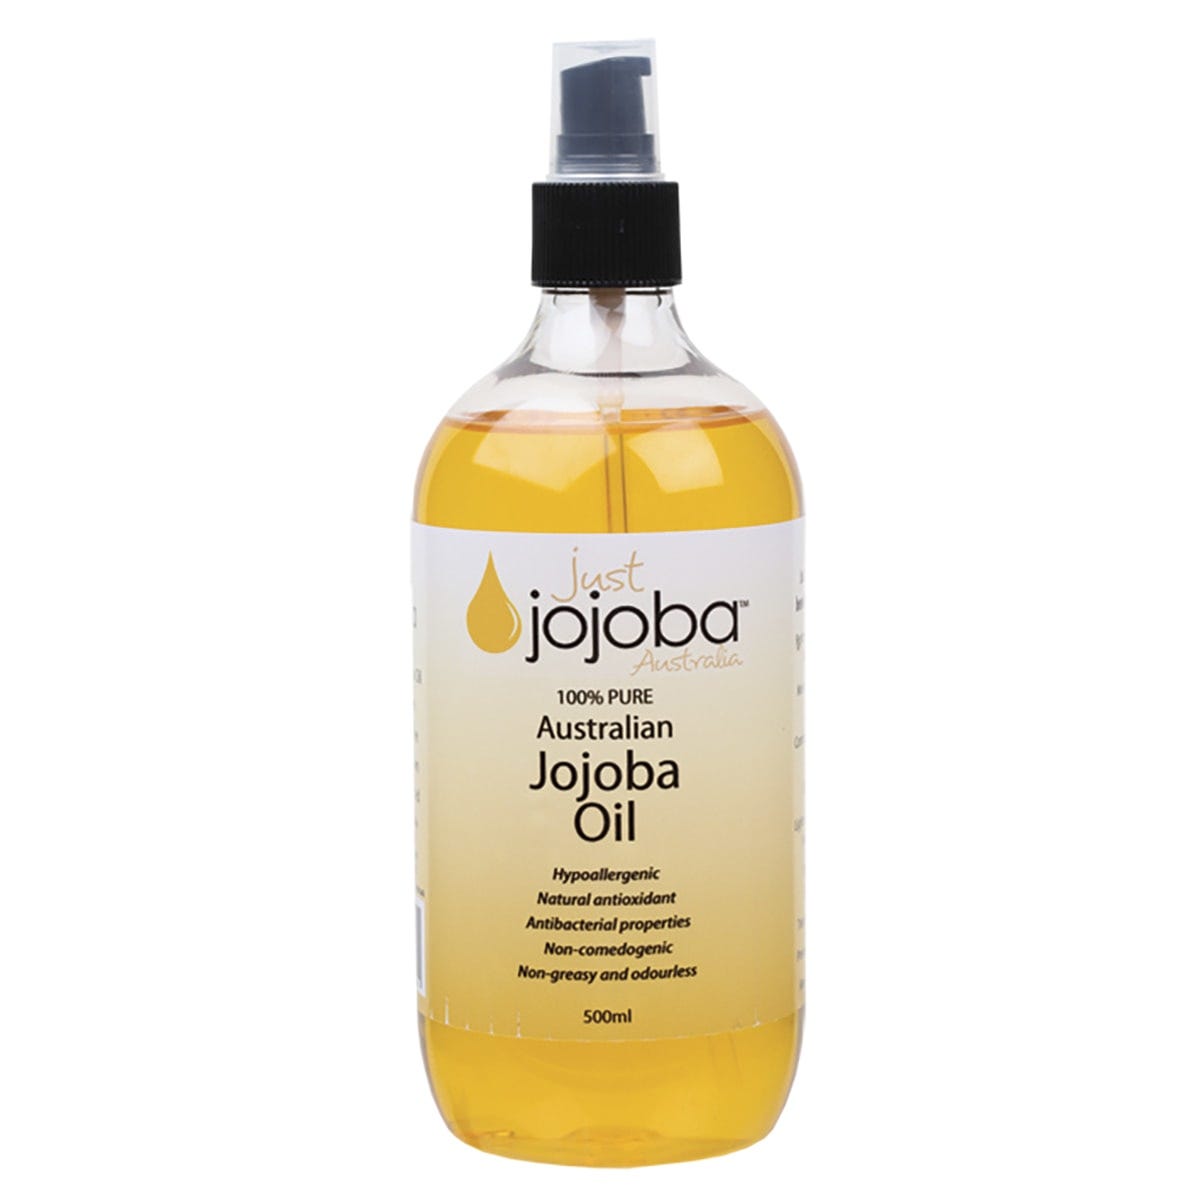 Pure Australian Jojoba Oil